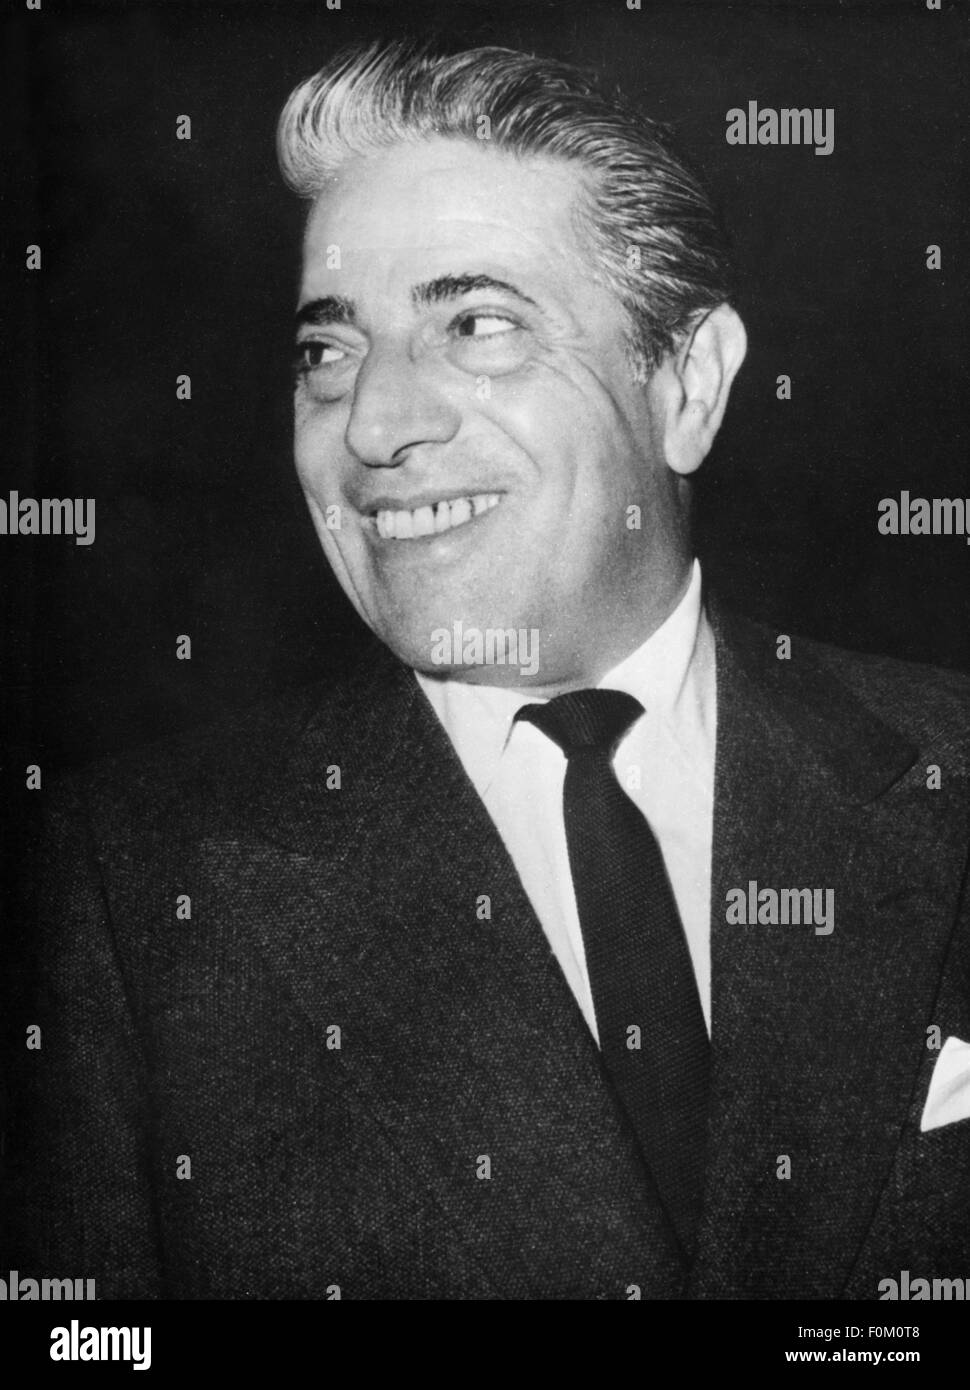 Onassis, Aristoteles, 15.1.1906 - 15.3.1975, Greek businessman (shipowner), portrait, London, 22.11.1958, Stock Photo